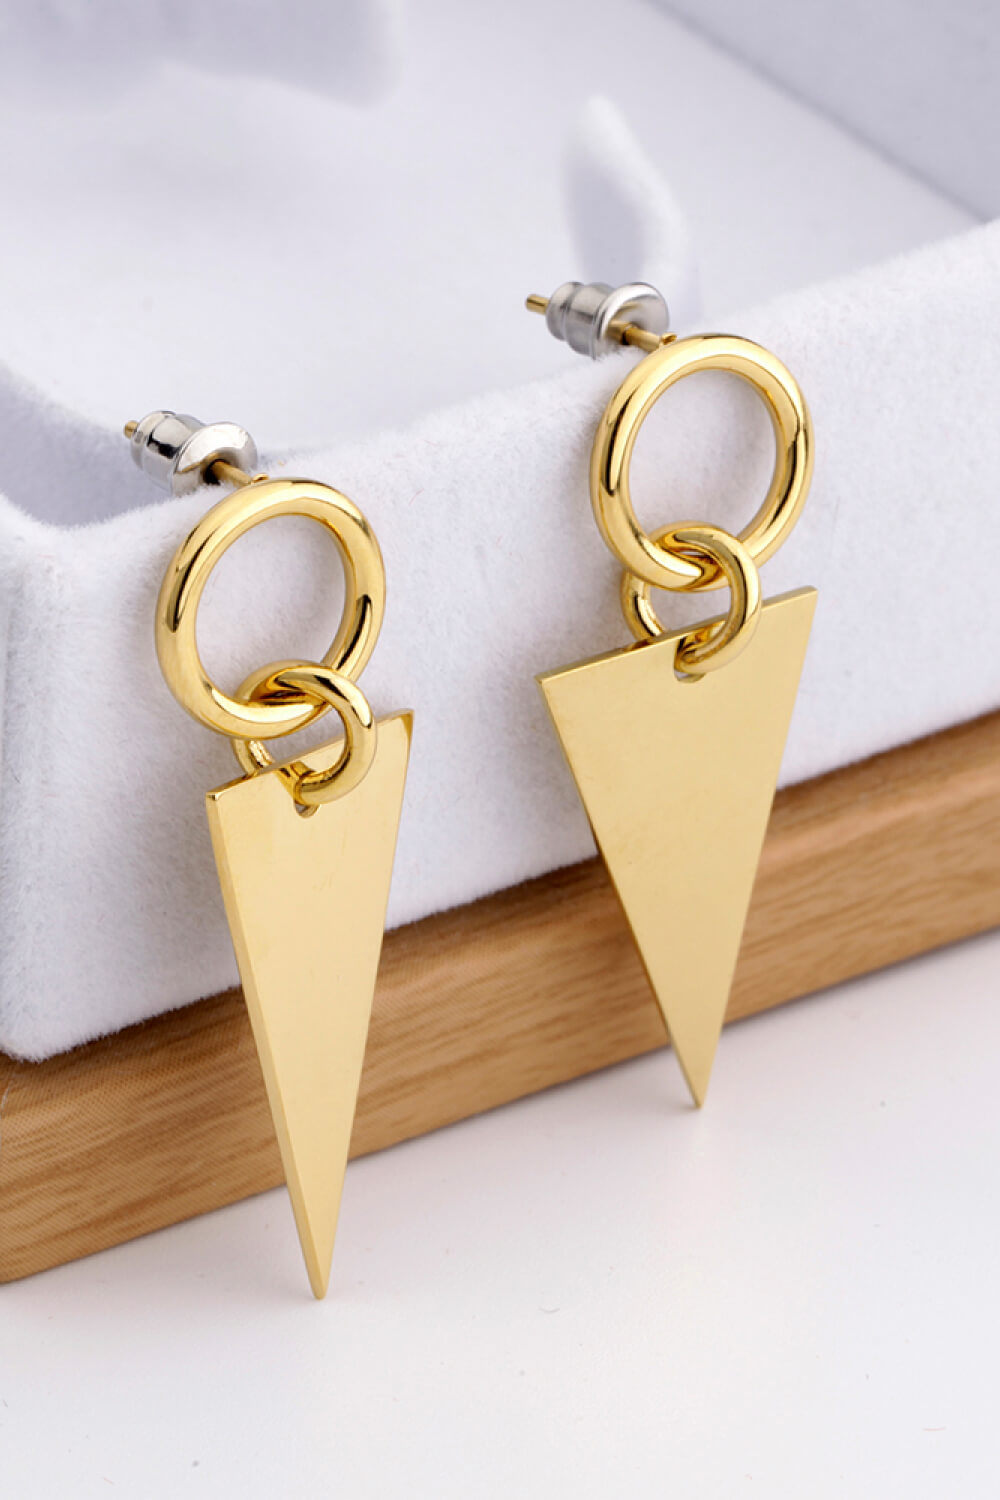 Stainless Steel Triangle Dangle Earrings - Earrings - FITGGINS